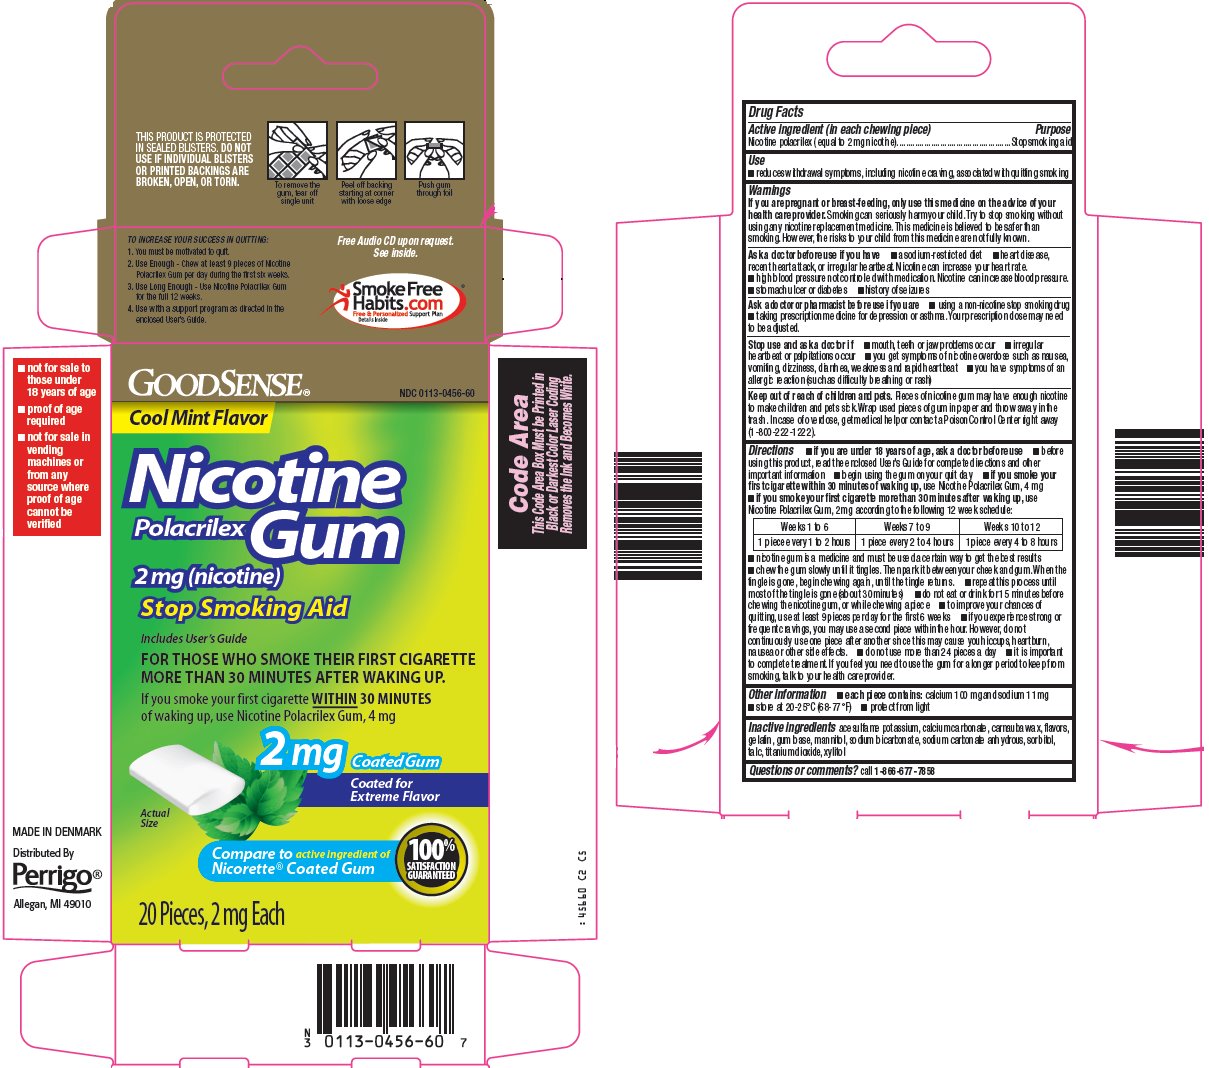 Good Sense Nicotine Gum image